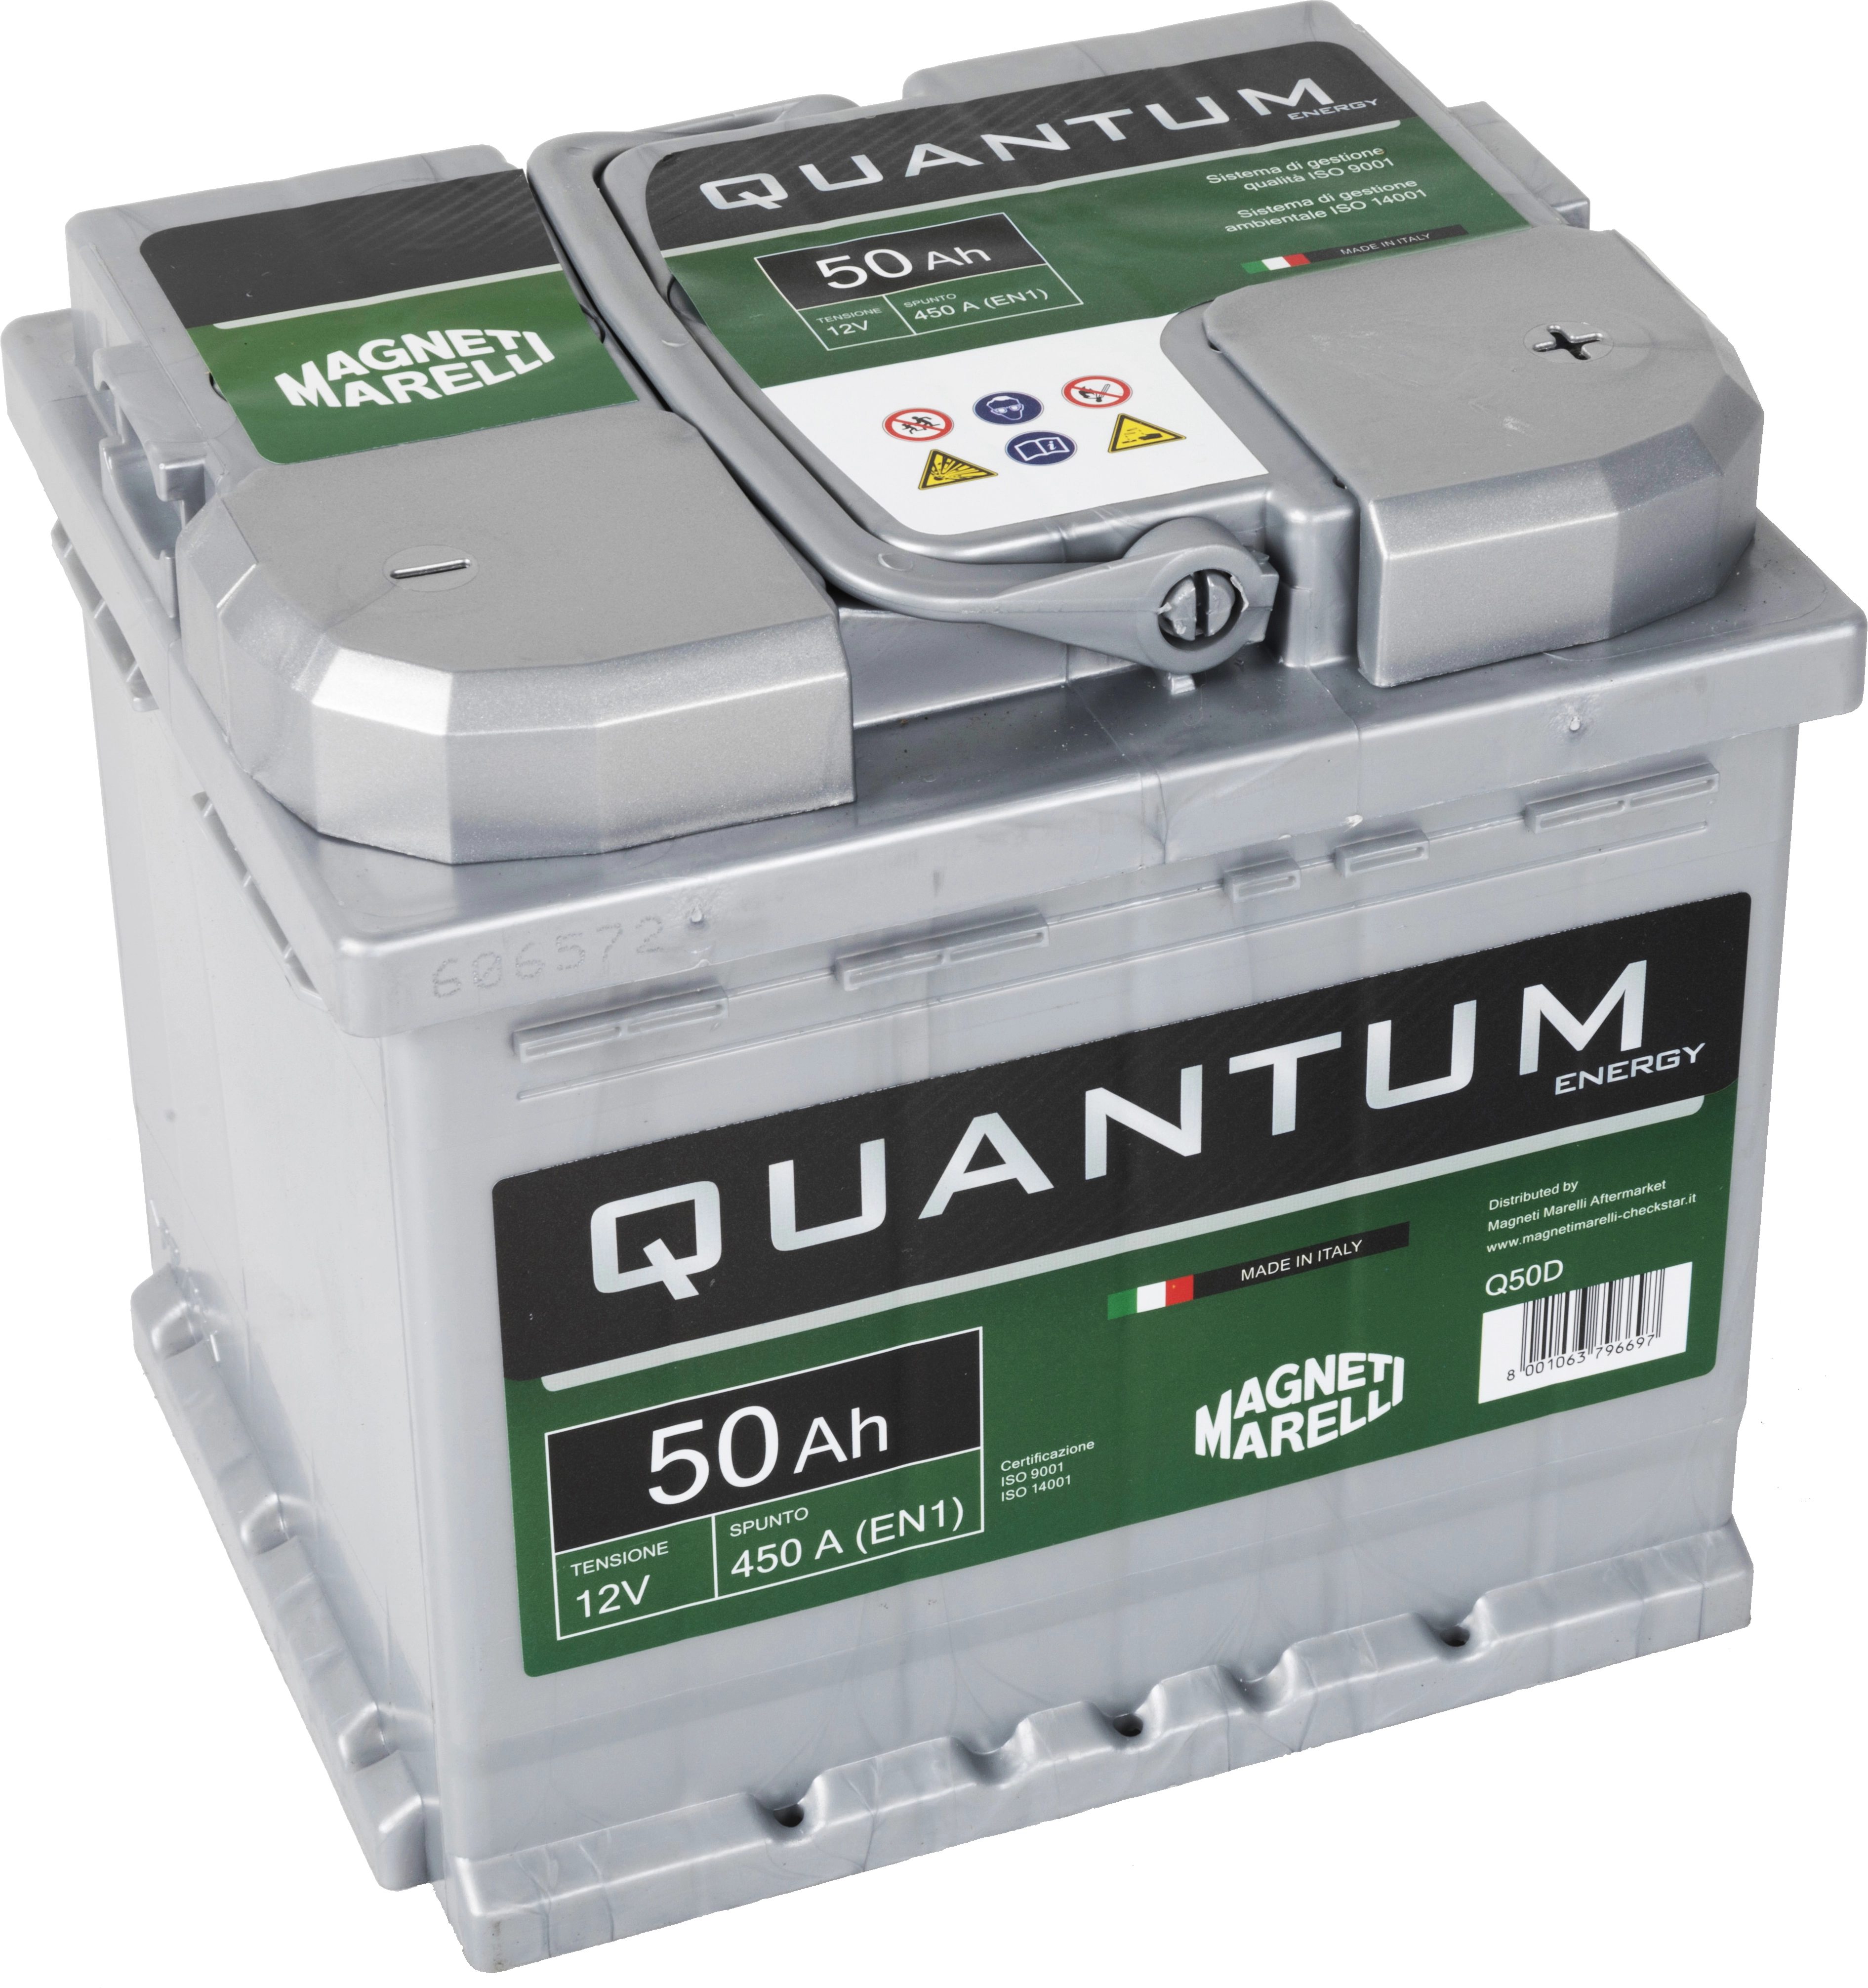 OFFERTA Batteria per auto 'quantum' magneti marelli 50ah, 450a